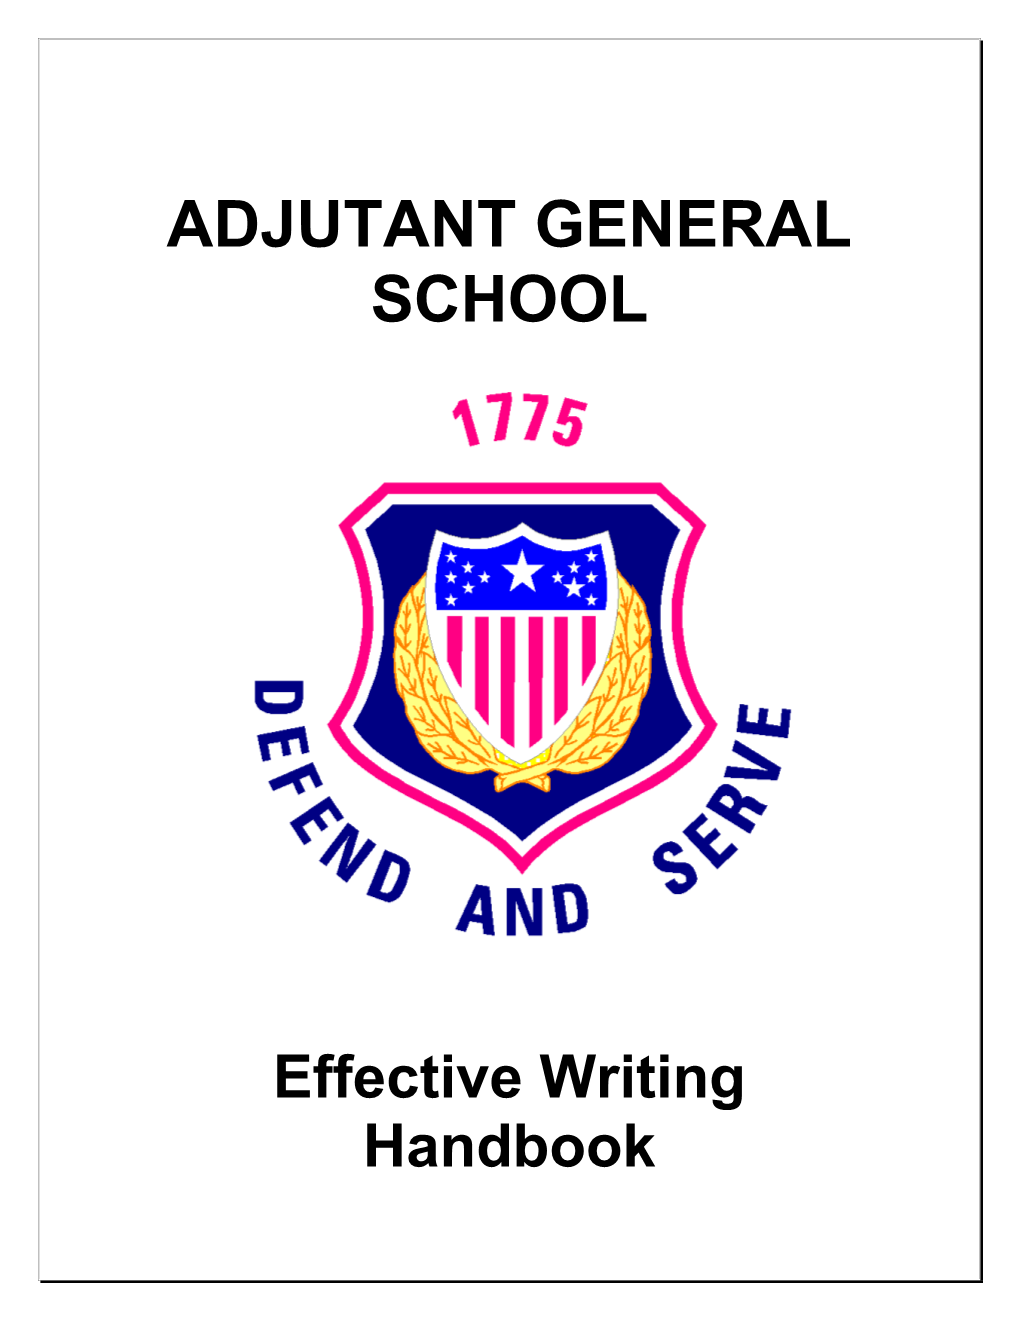 Adjutant General School